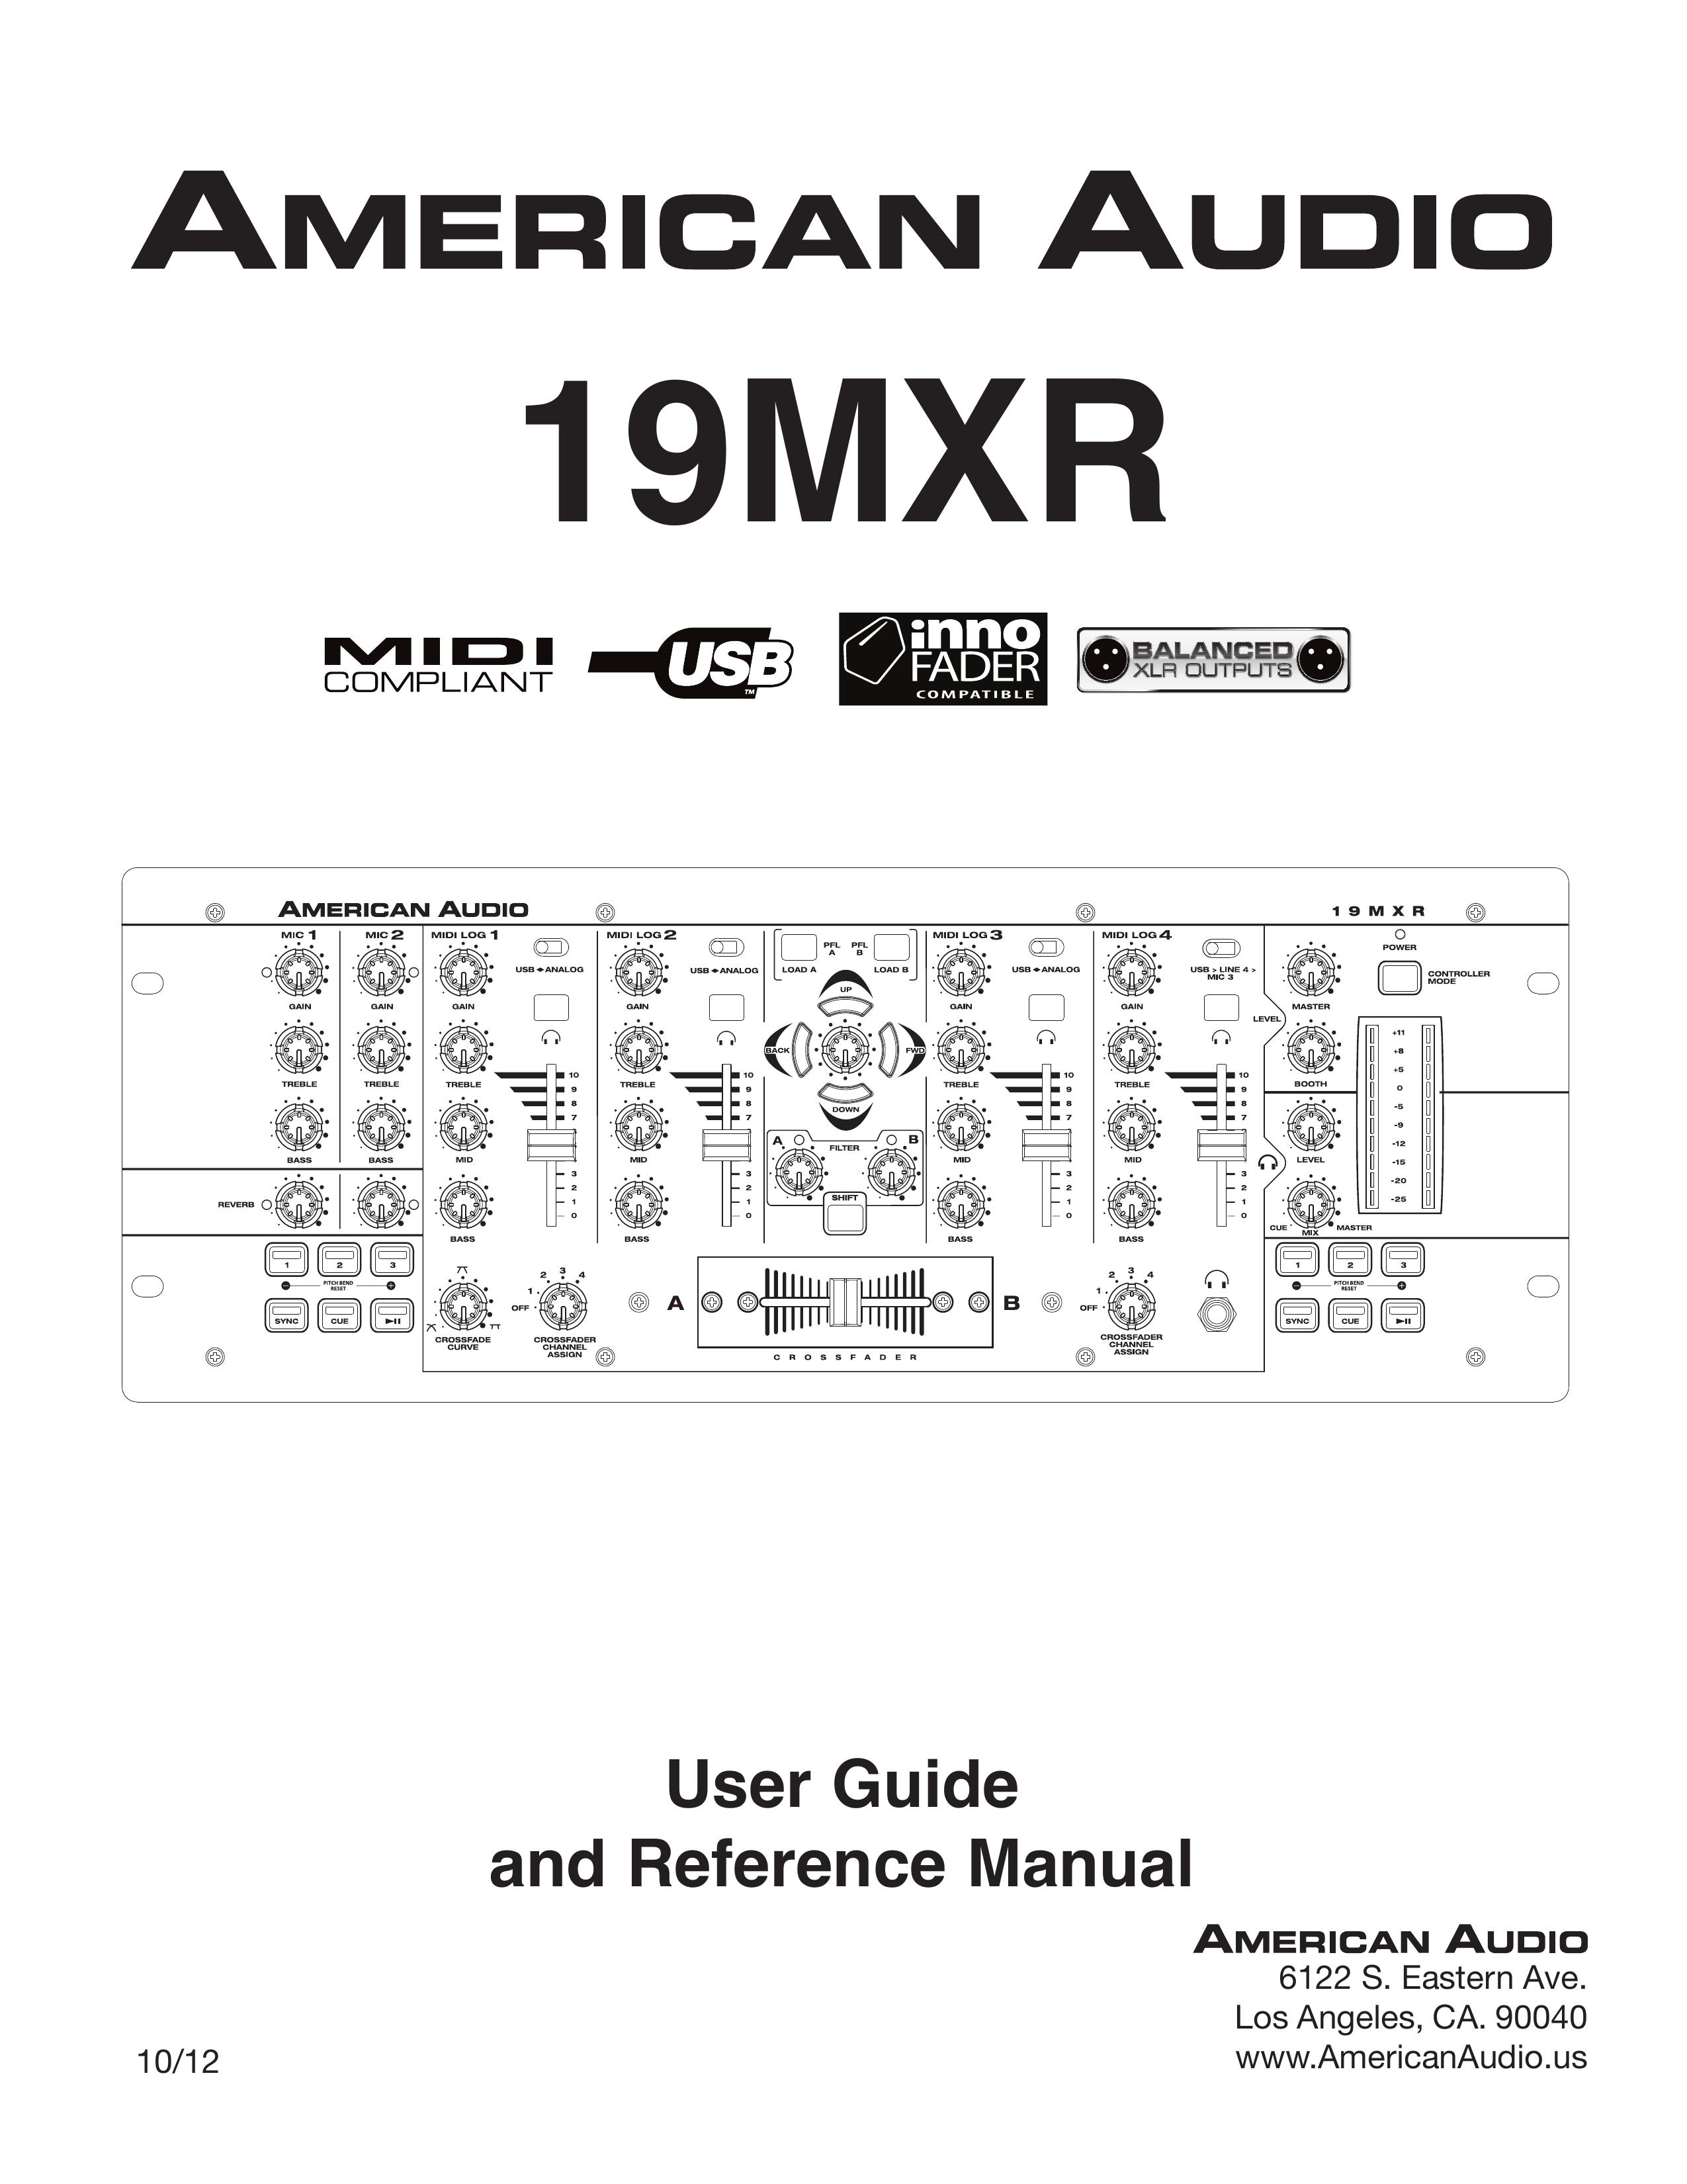 American Audio 19MXR Music Mixer User Manual (Page 1)